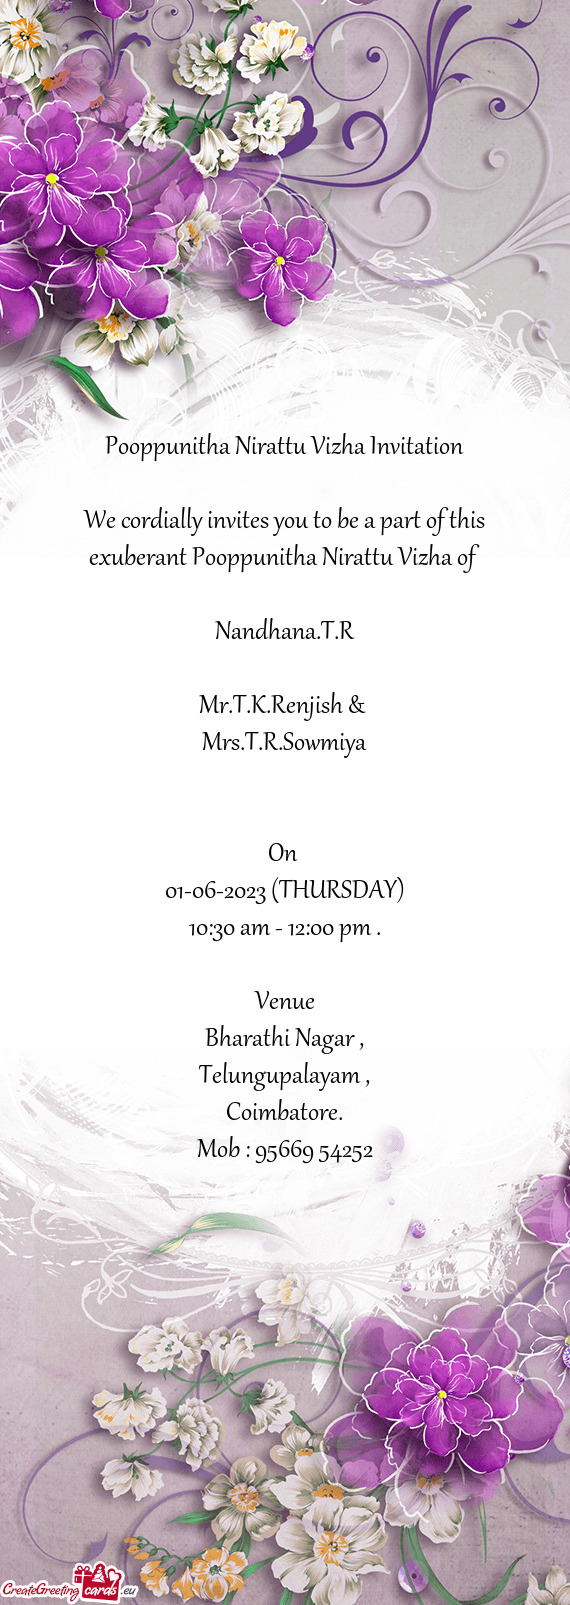 We cordially invites you to be a part of this exuberant Pooppunitha Nirattu Vizha of